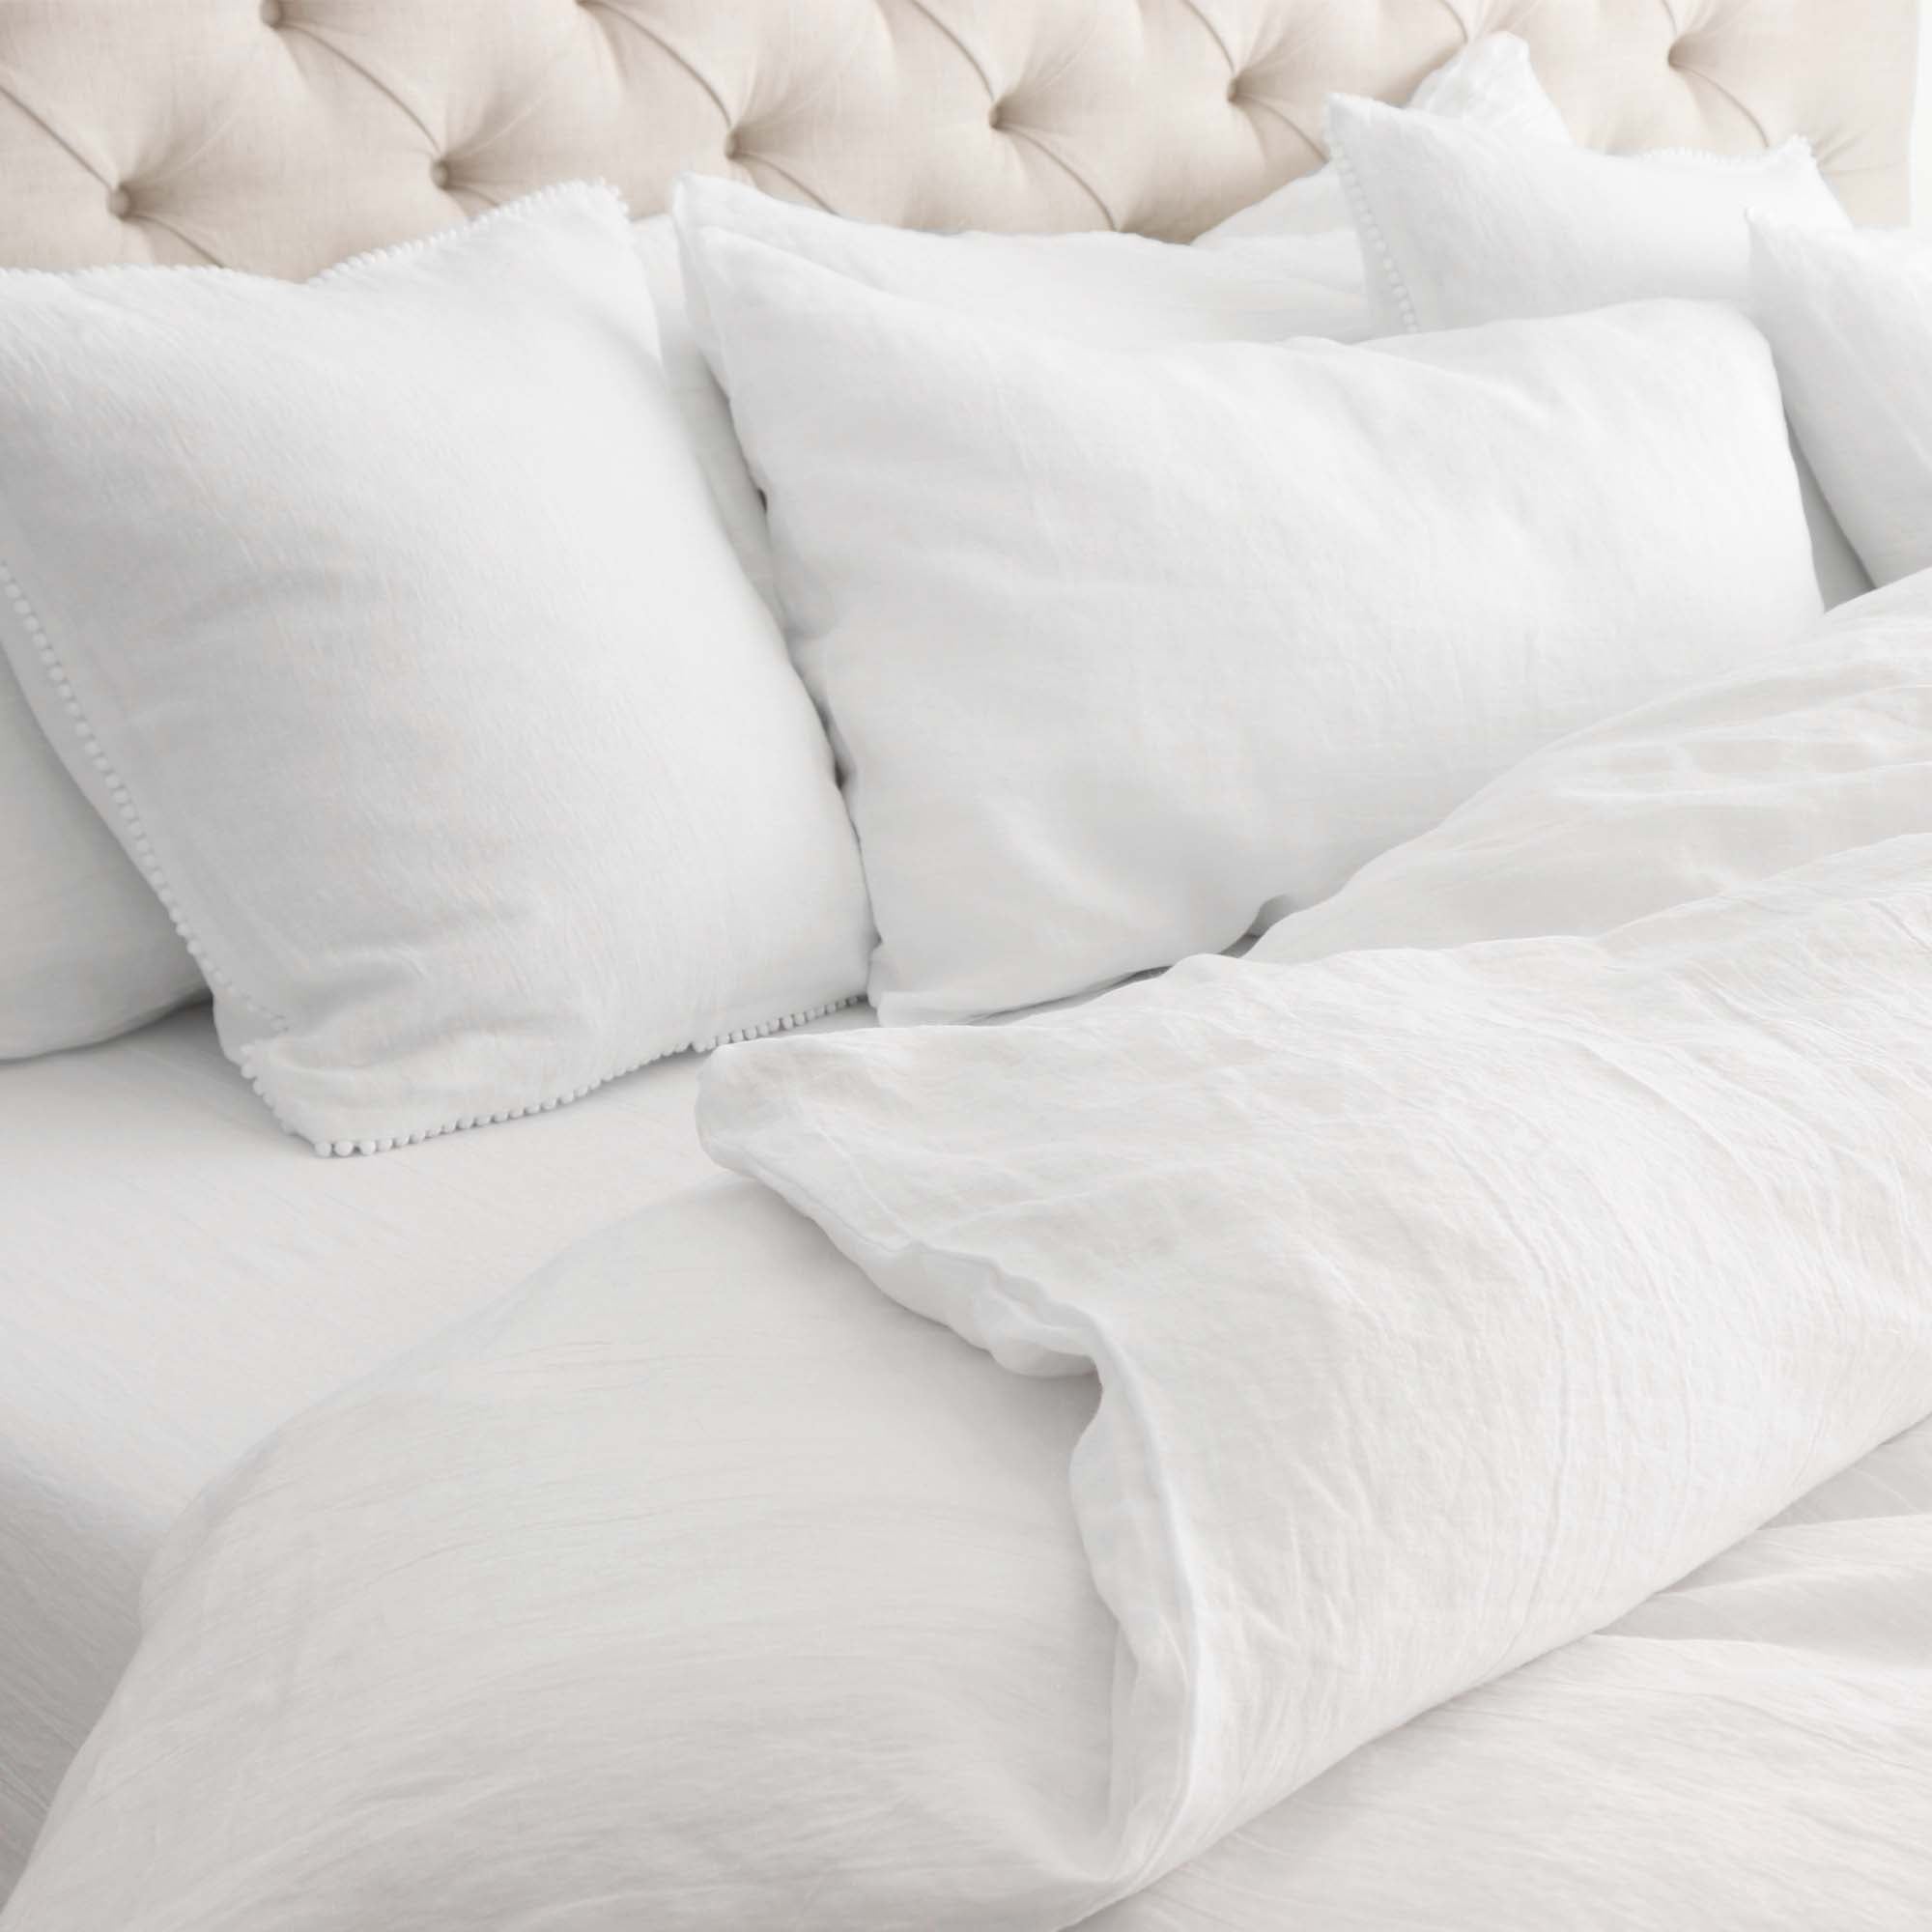 King Duvet Cover with Pillow Cases in European White Linen OEKO-TEX Bedding  Edit alt text